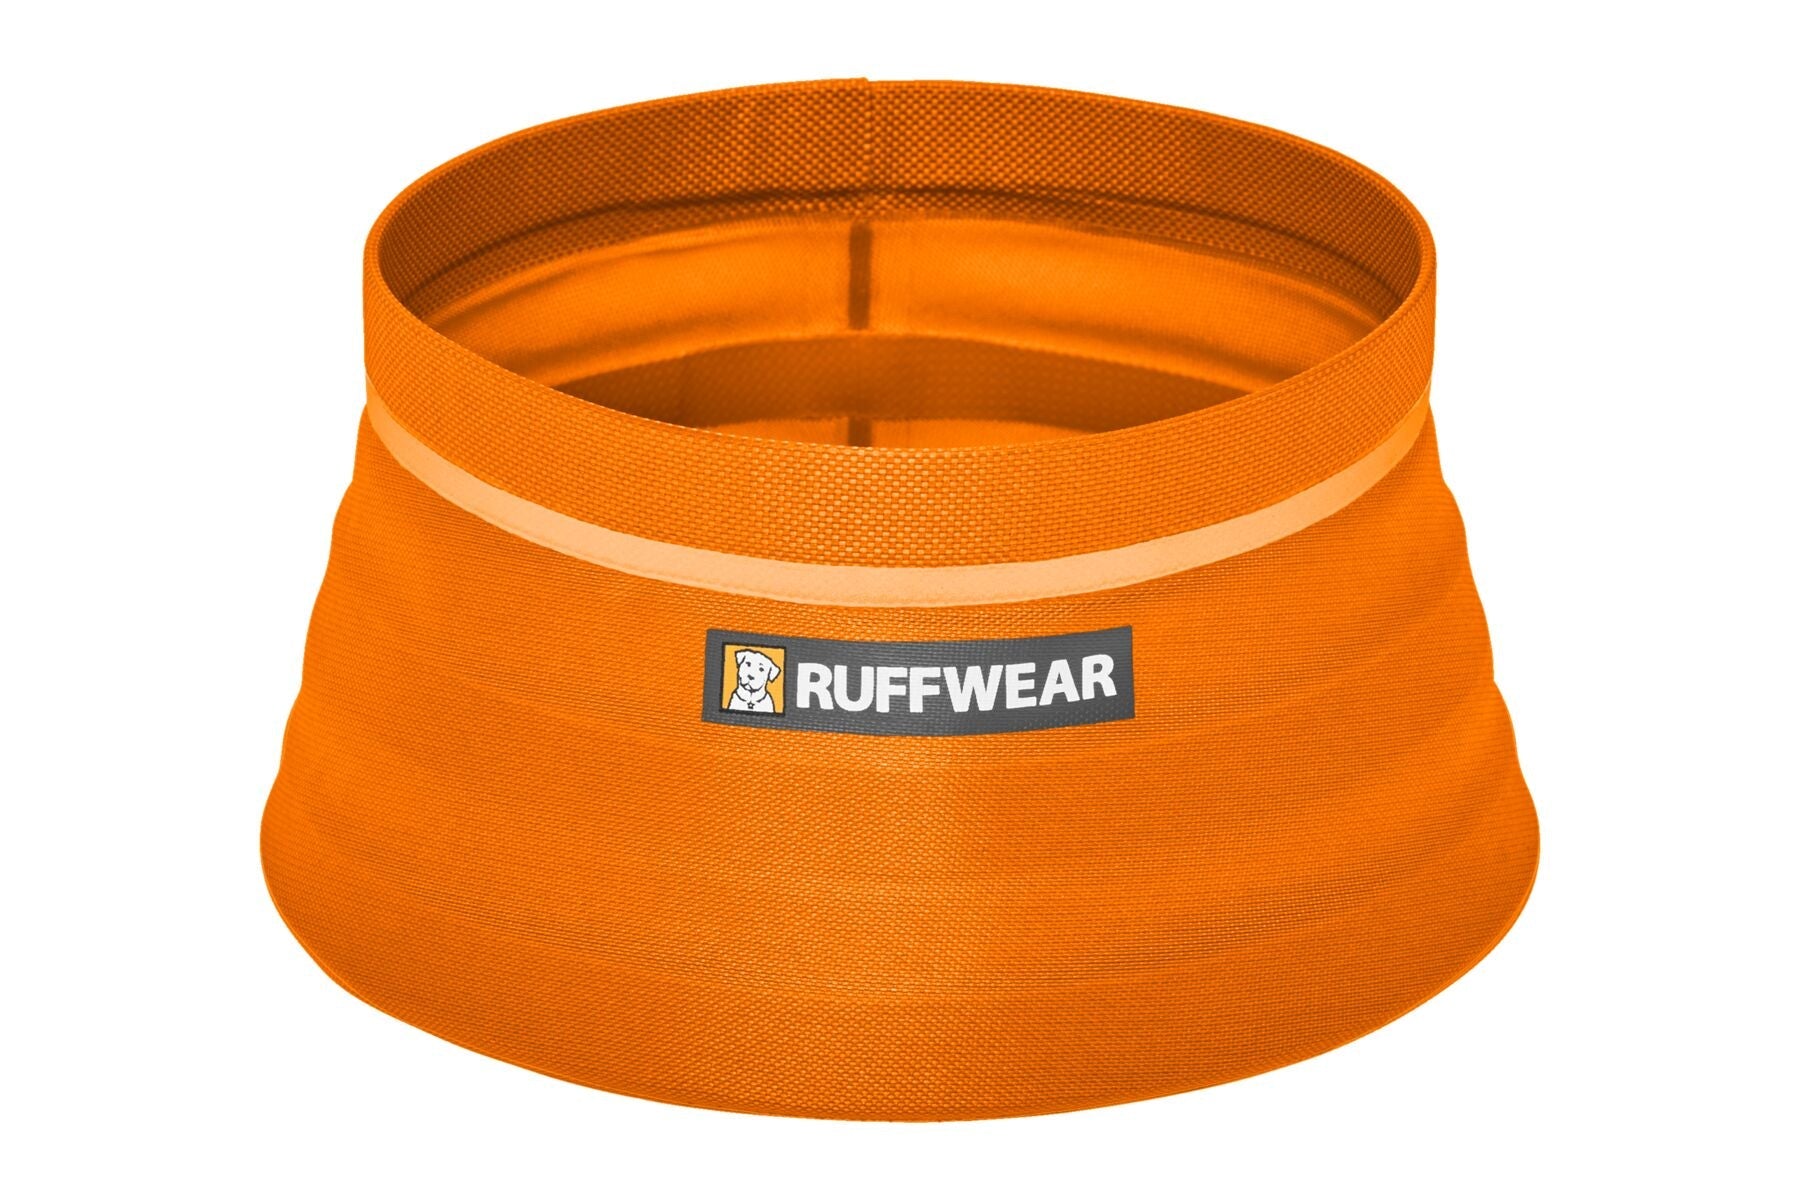 Ruffwear Bivy Bowl - Light, collapsible, waterproof Dog bowl